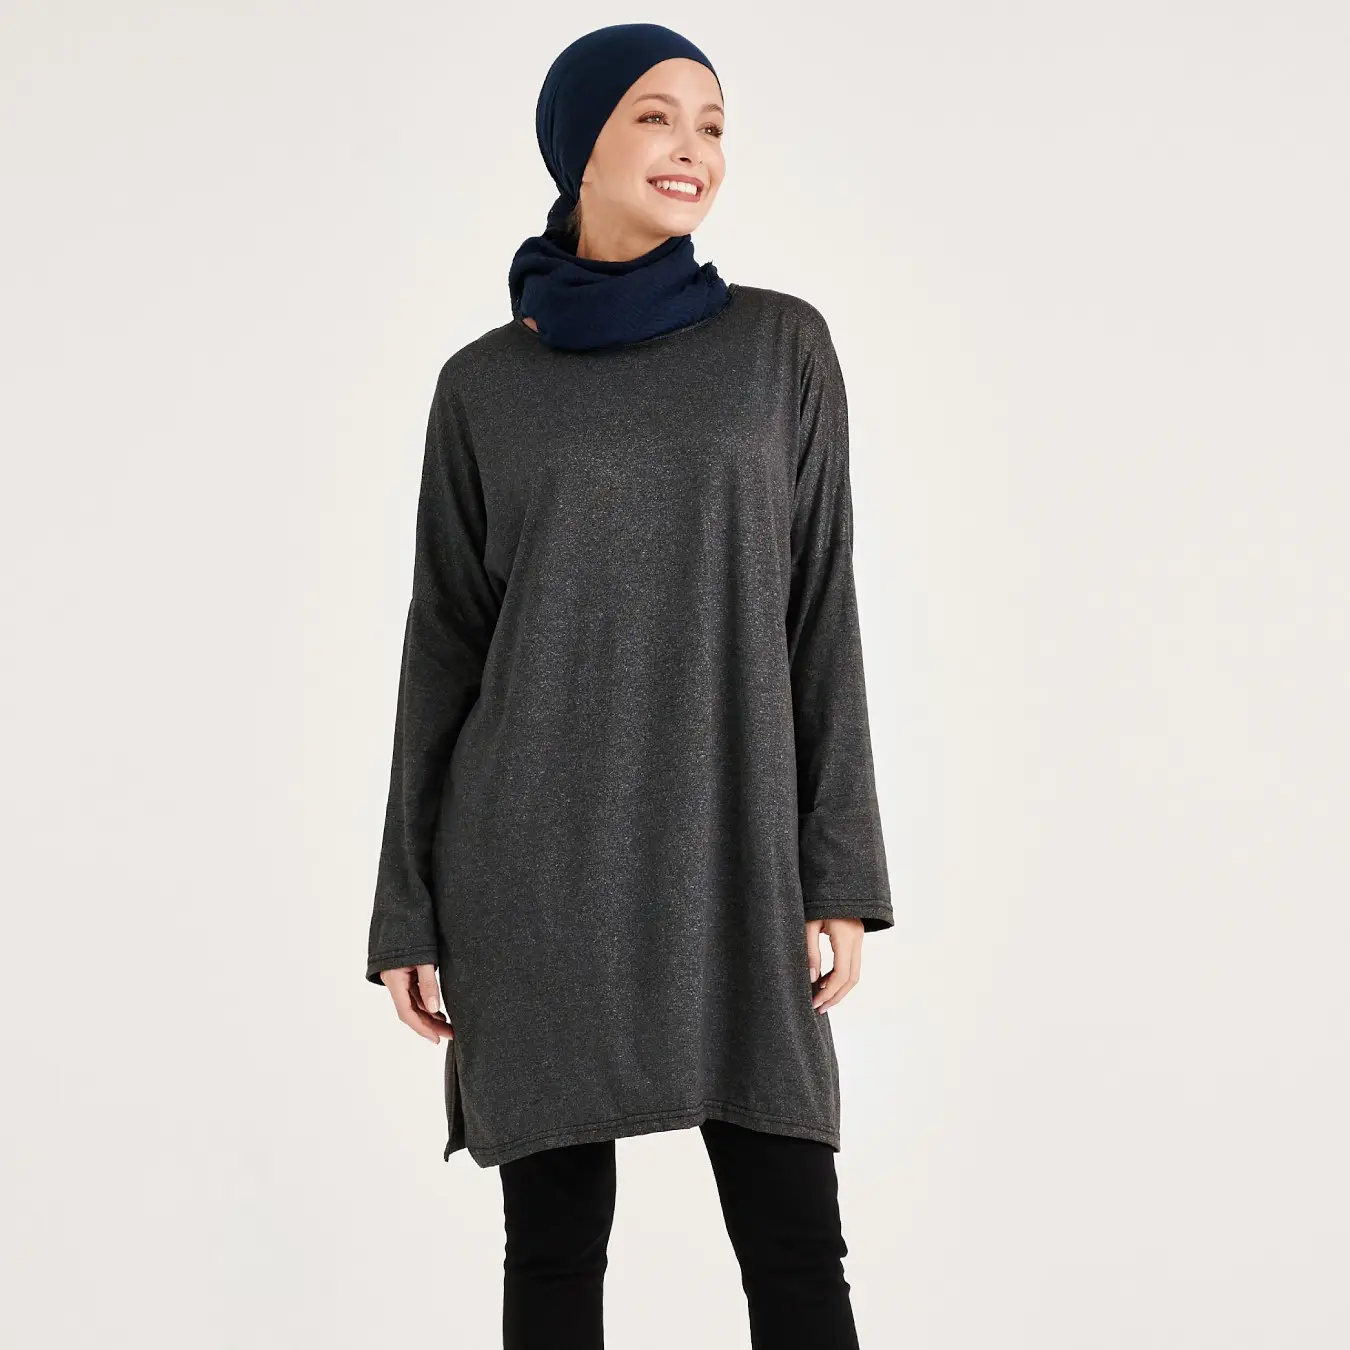 Elebe Elya Blouse Grey Wholesale Woman Blouse Long Sleeve Free Size Plus Size Tops High Quality Cotton Plain Maternity Blouse